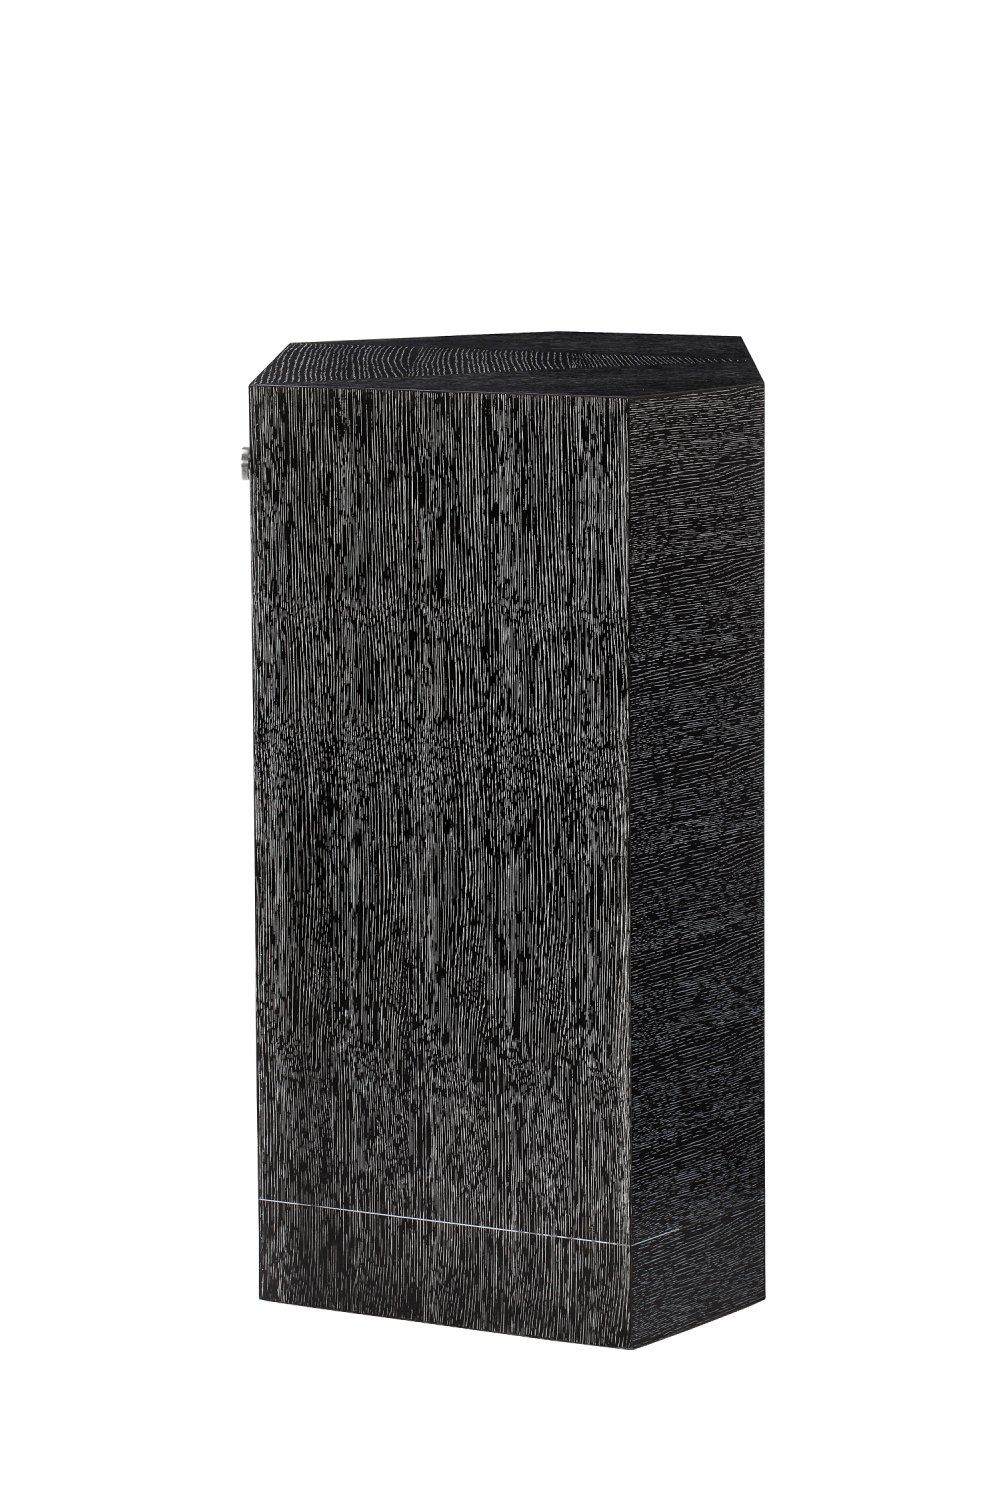 Cerused Black Wood Two Door Sideboard | Andrew Martin Vergal | OROA